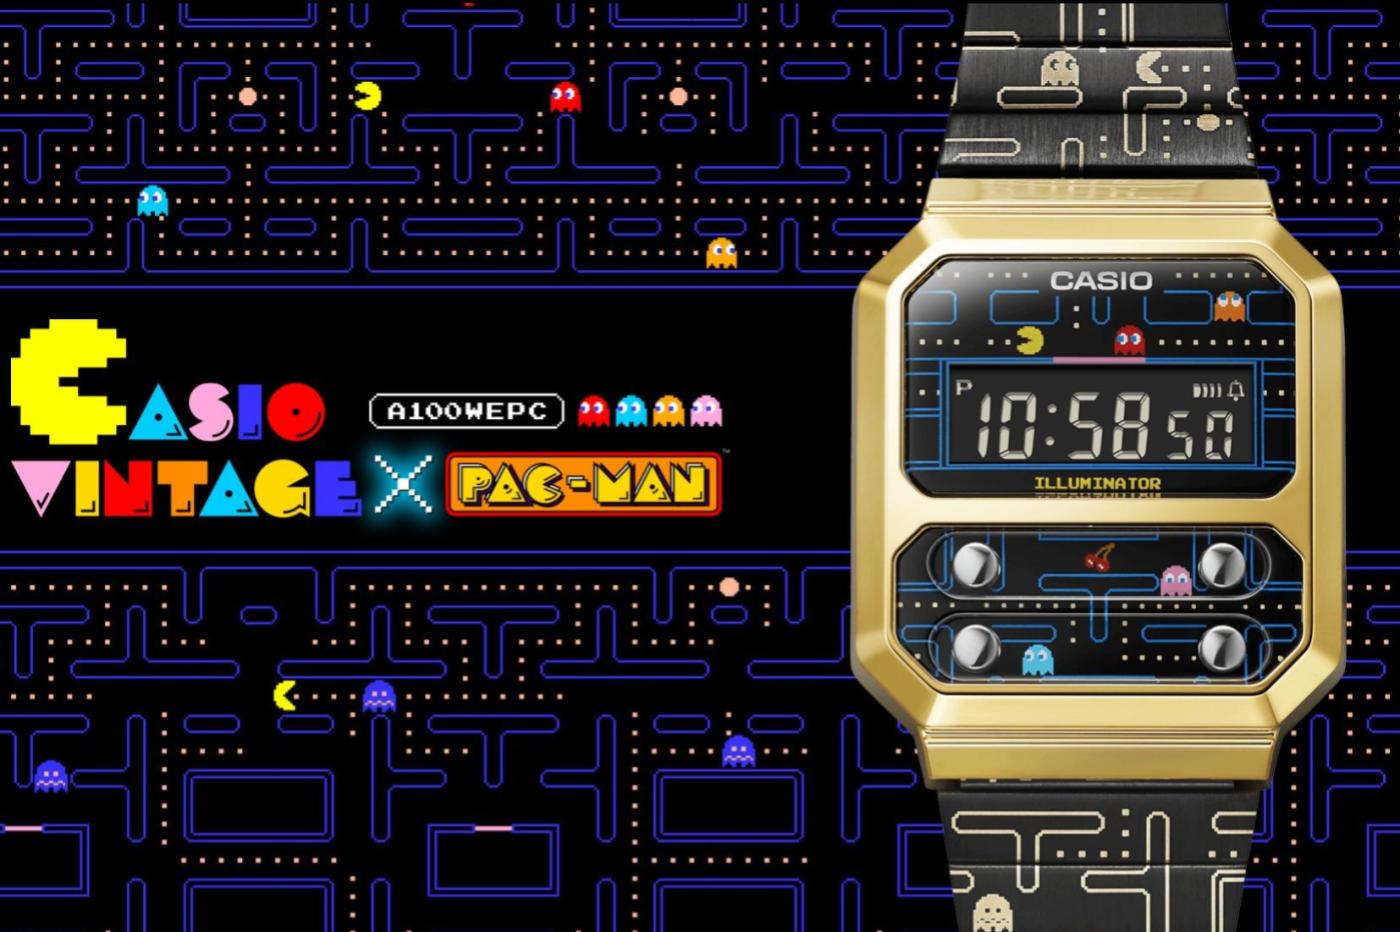 Montre Pac-Man Casio